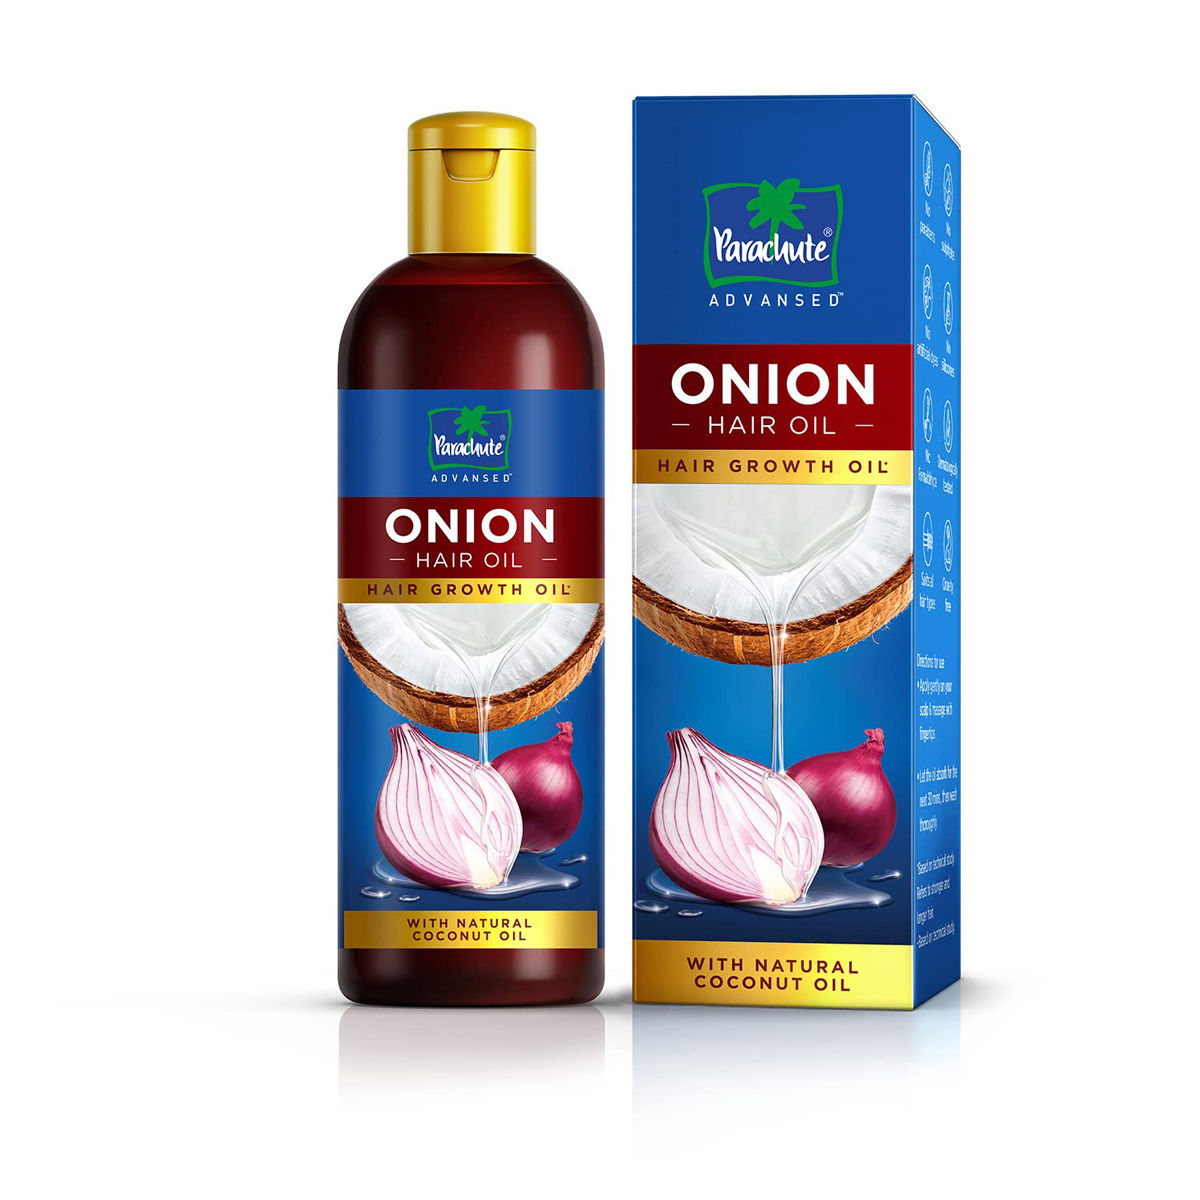 Parachute Advansed Onion Hair Oil, 200 ml, Pack of 1 